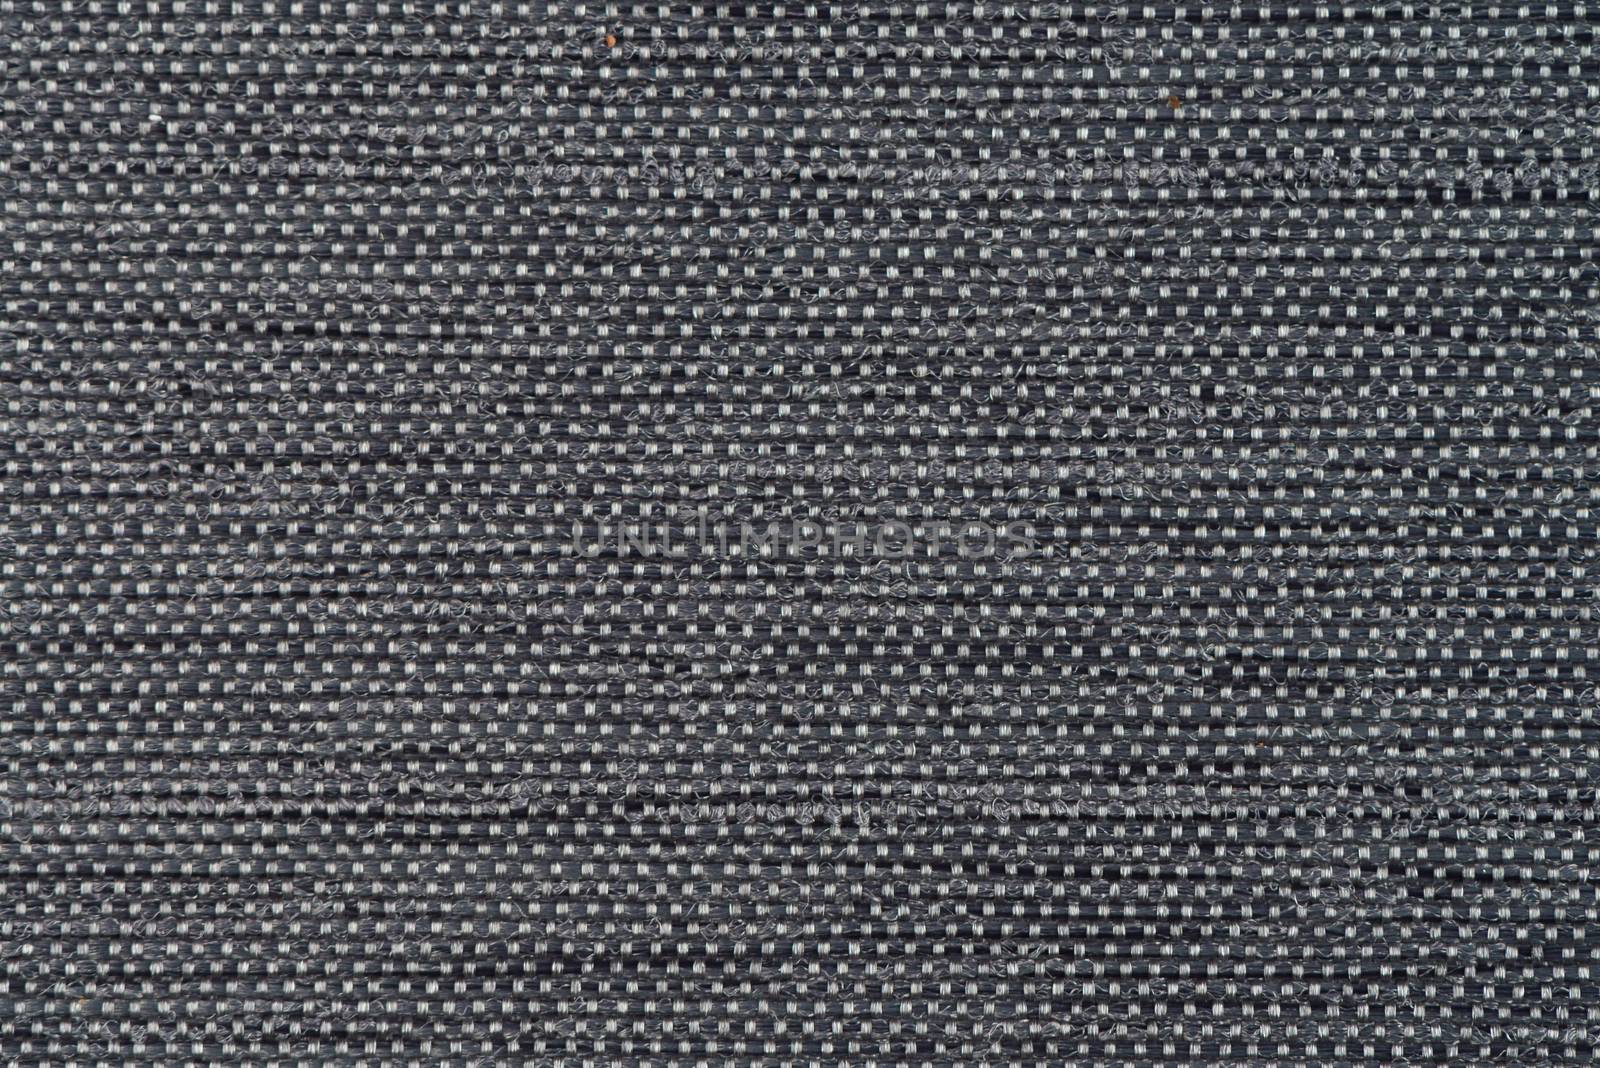 Embossed vinyl texture closeup texture background.